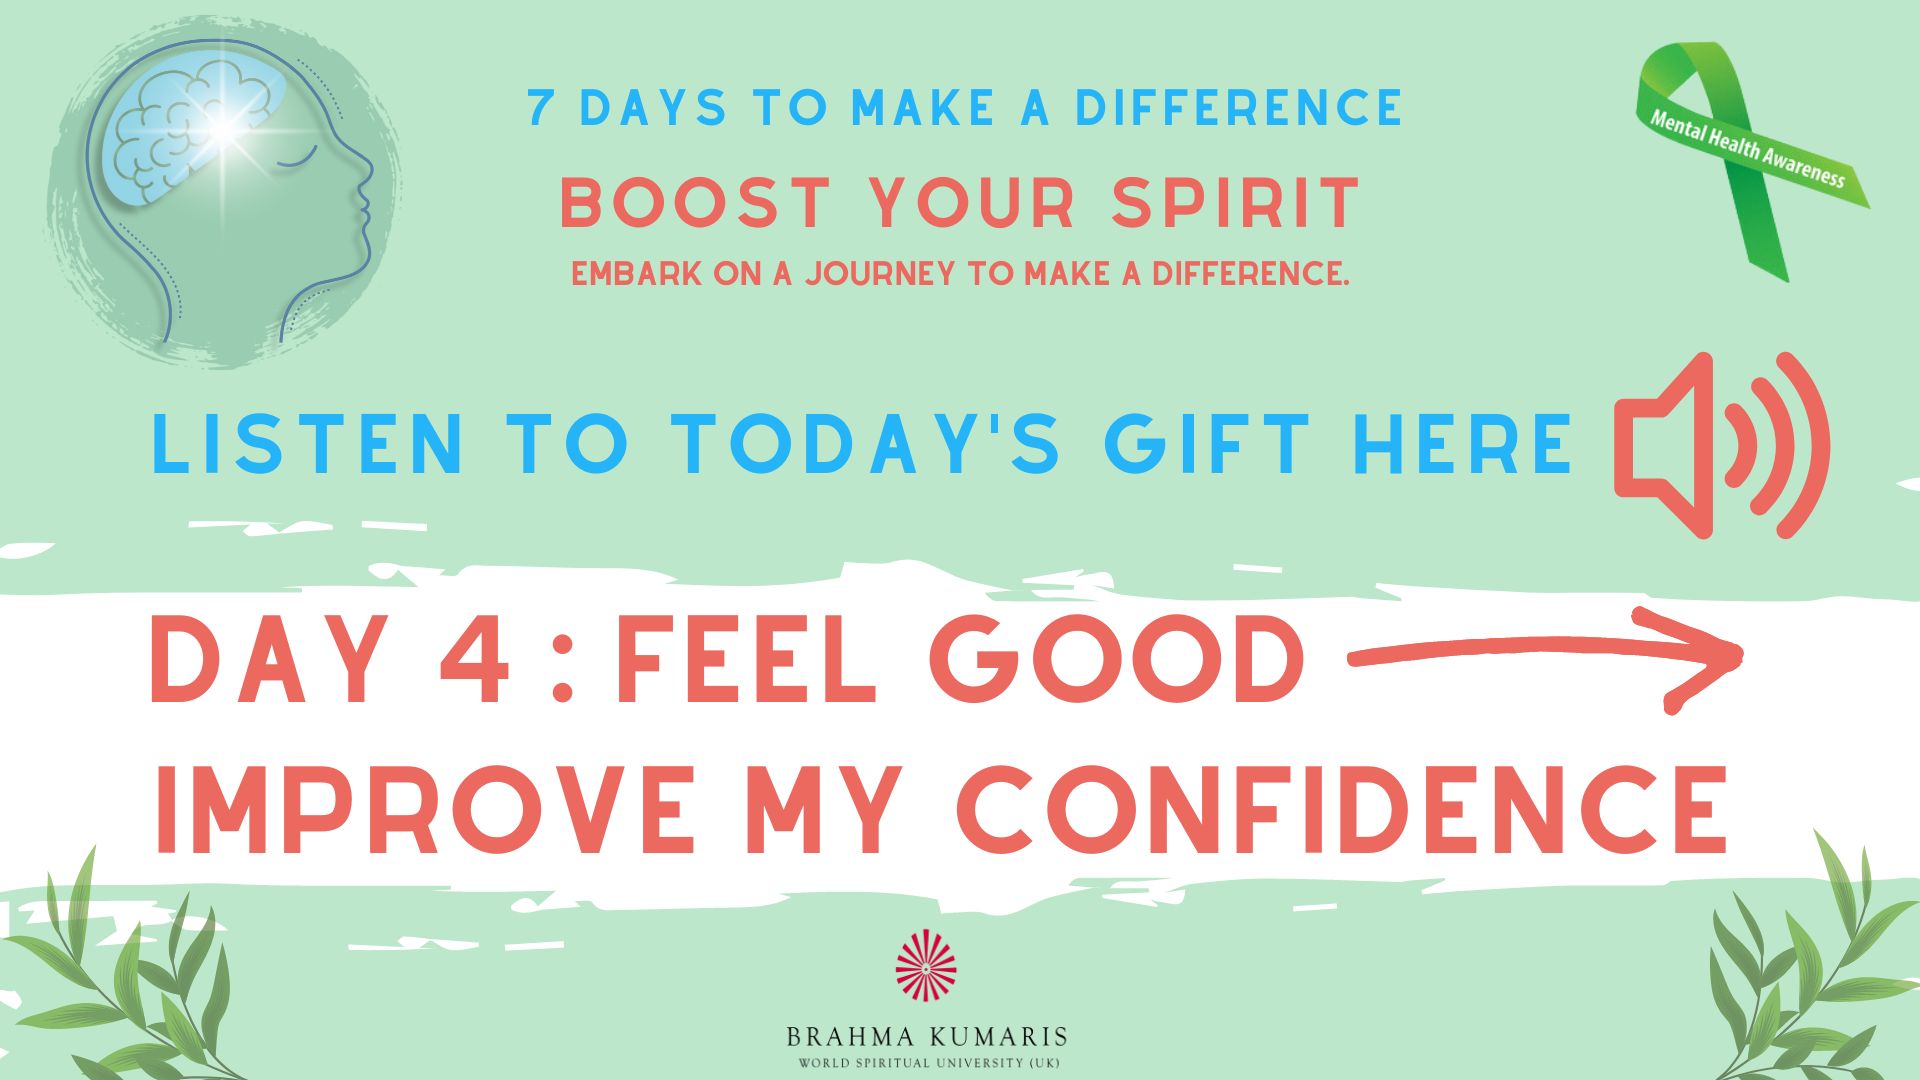 Day 4: Feel Good - Improve My Confidence